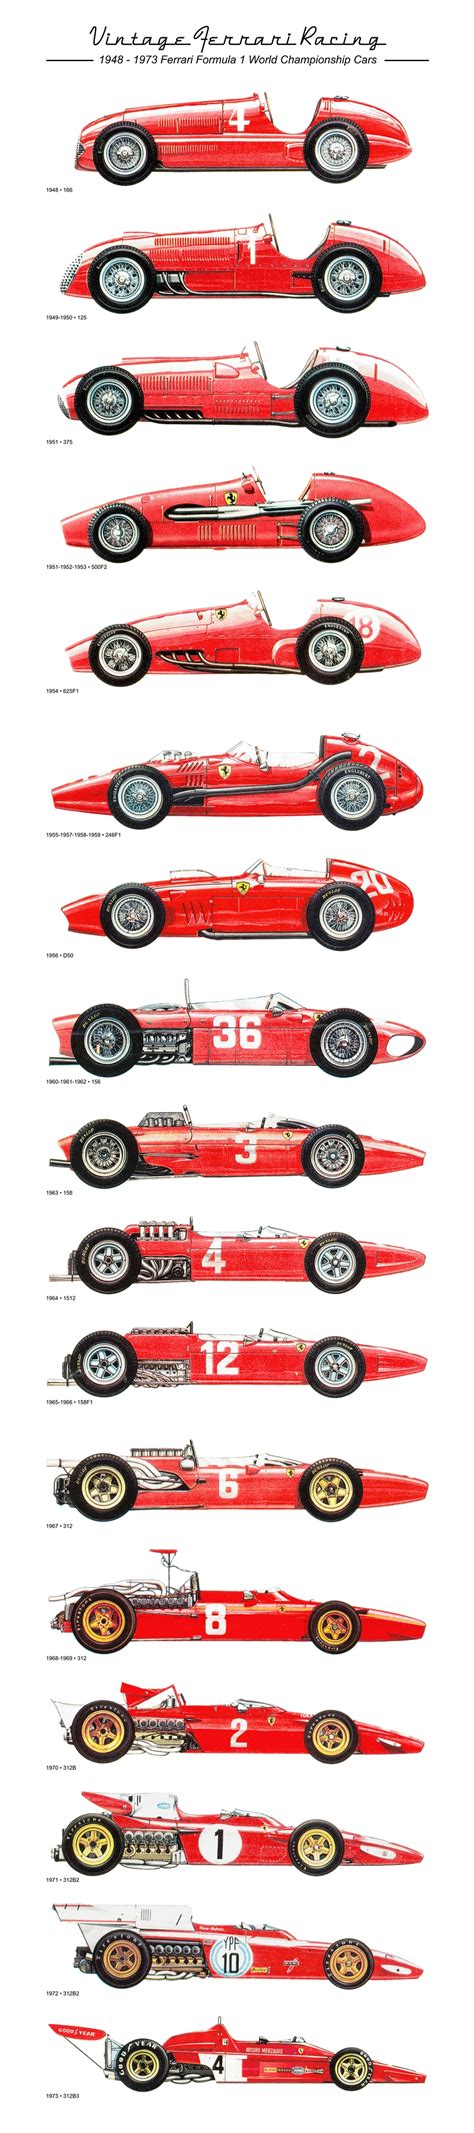 Vintage Ferrari Racing Poster By Lgruffa On Deviantart